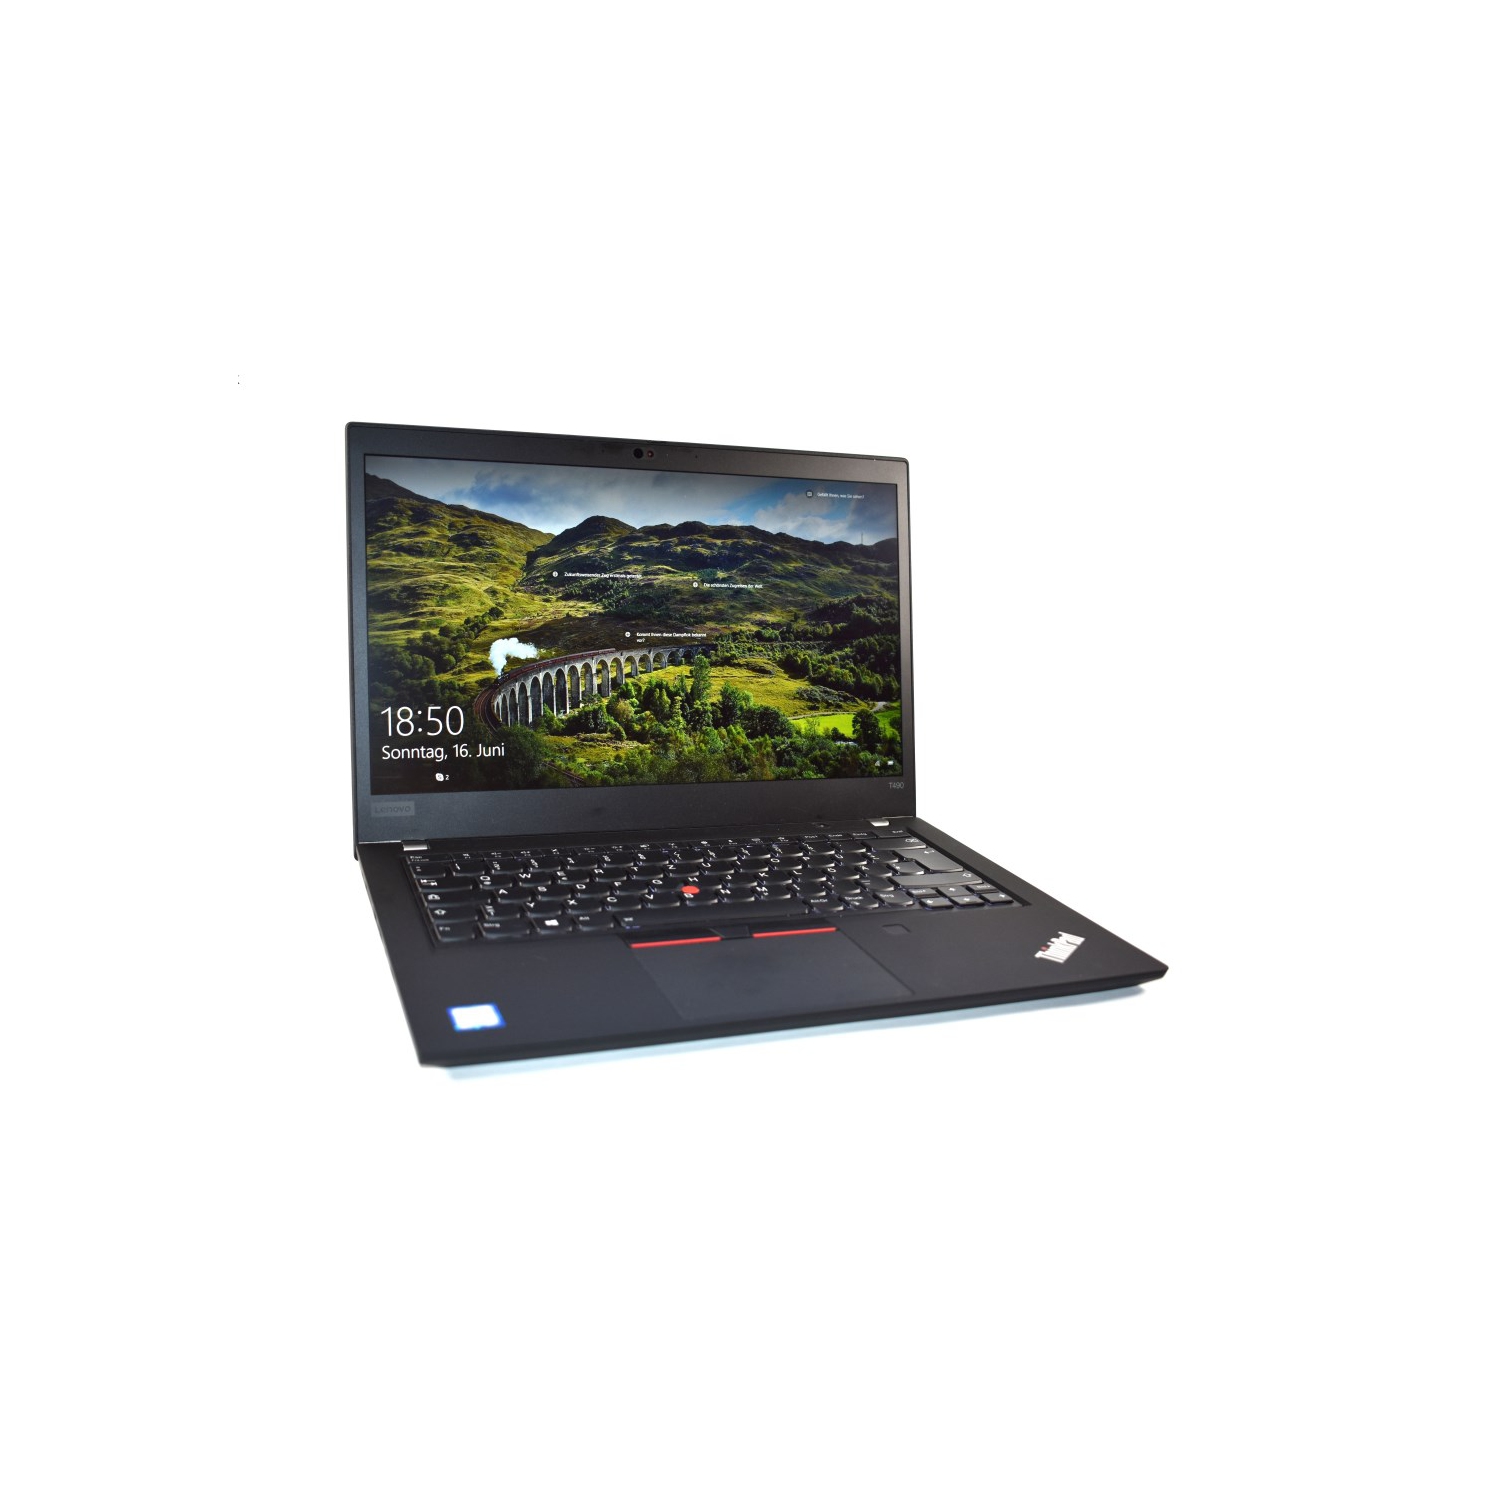 Refurbished (Good) - Lenovo ThinkPad T490s 14" Laptop - Black (Intel Core i7-8565U / 256GB SSD / 8GB RAM / Windows 10) - English - (20NX002JUS)